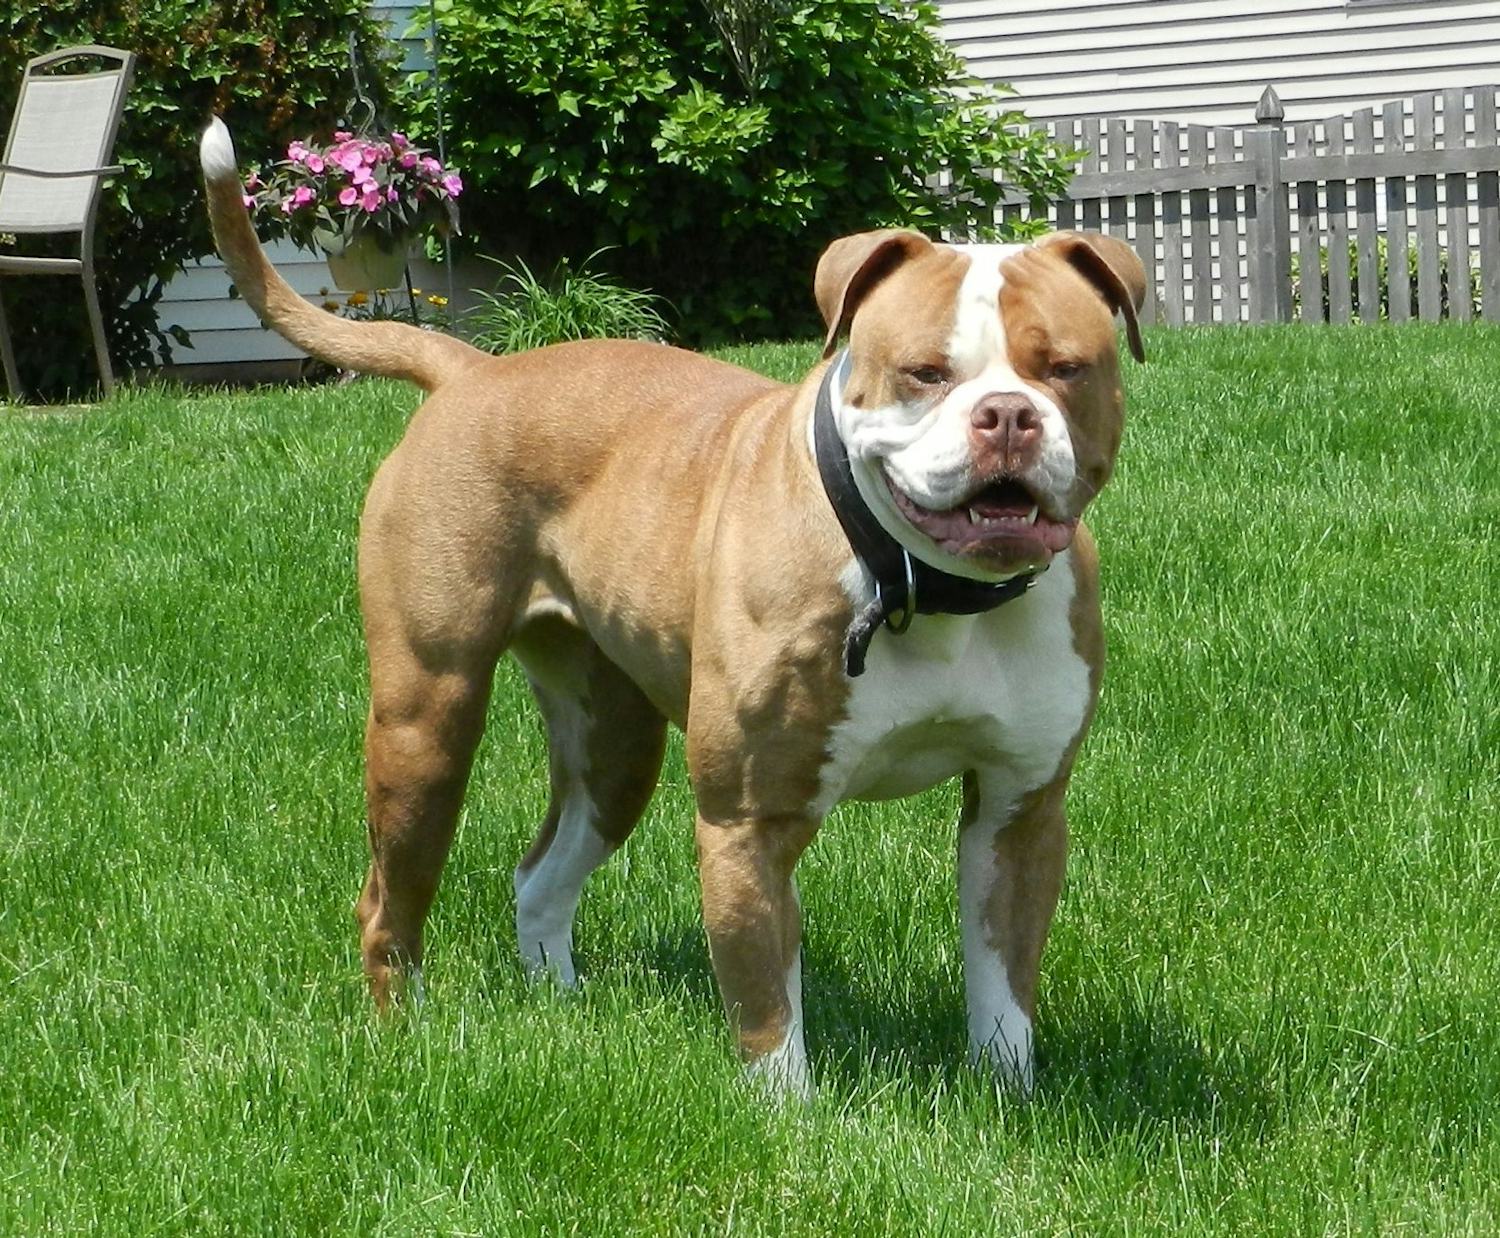 Secondary image of American Bulldog dog breed